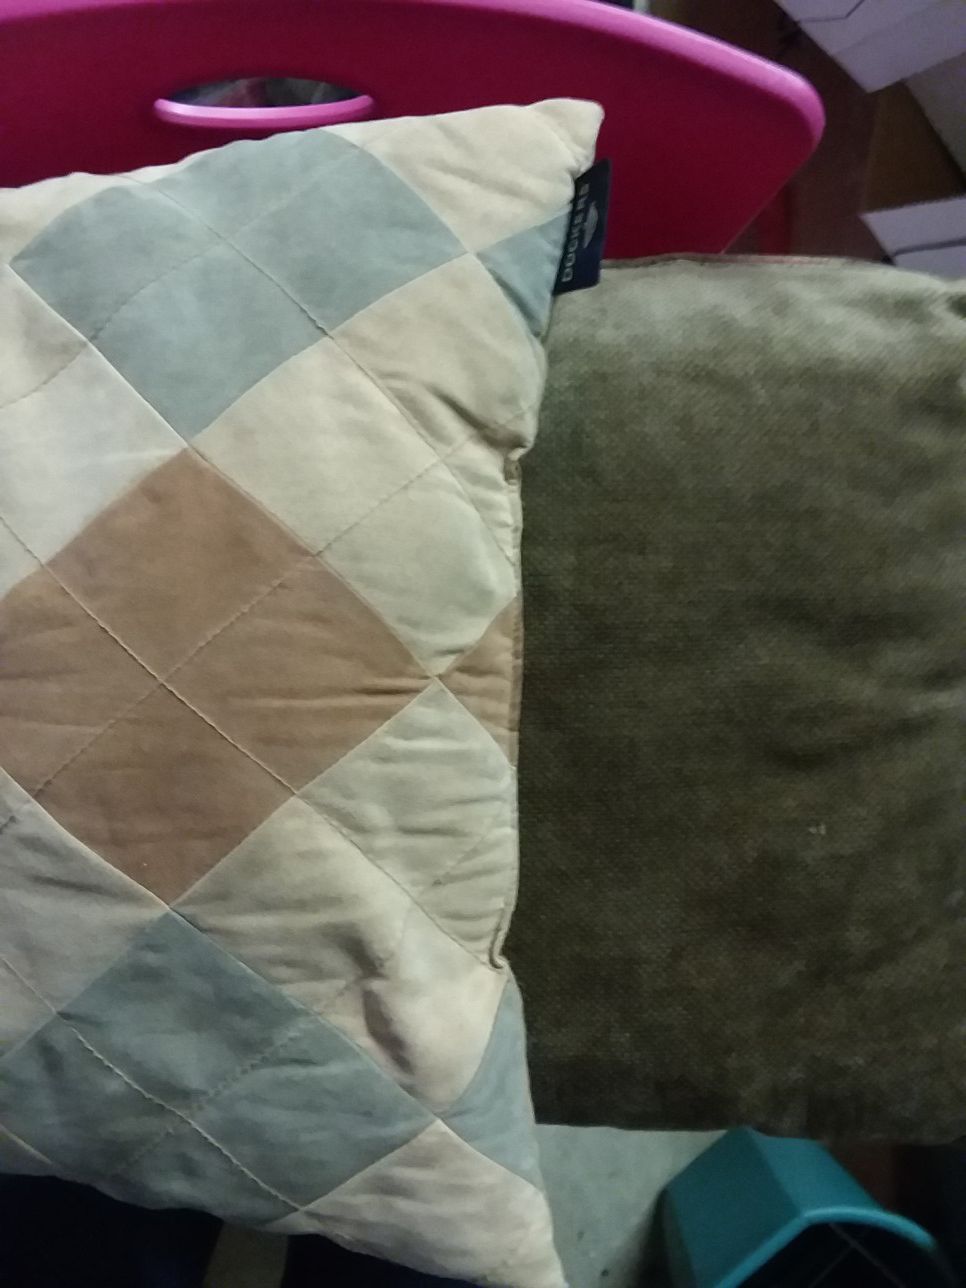 Two pillows